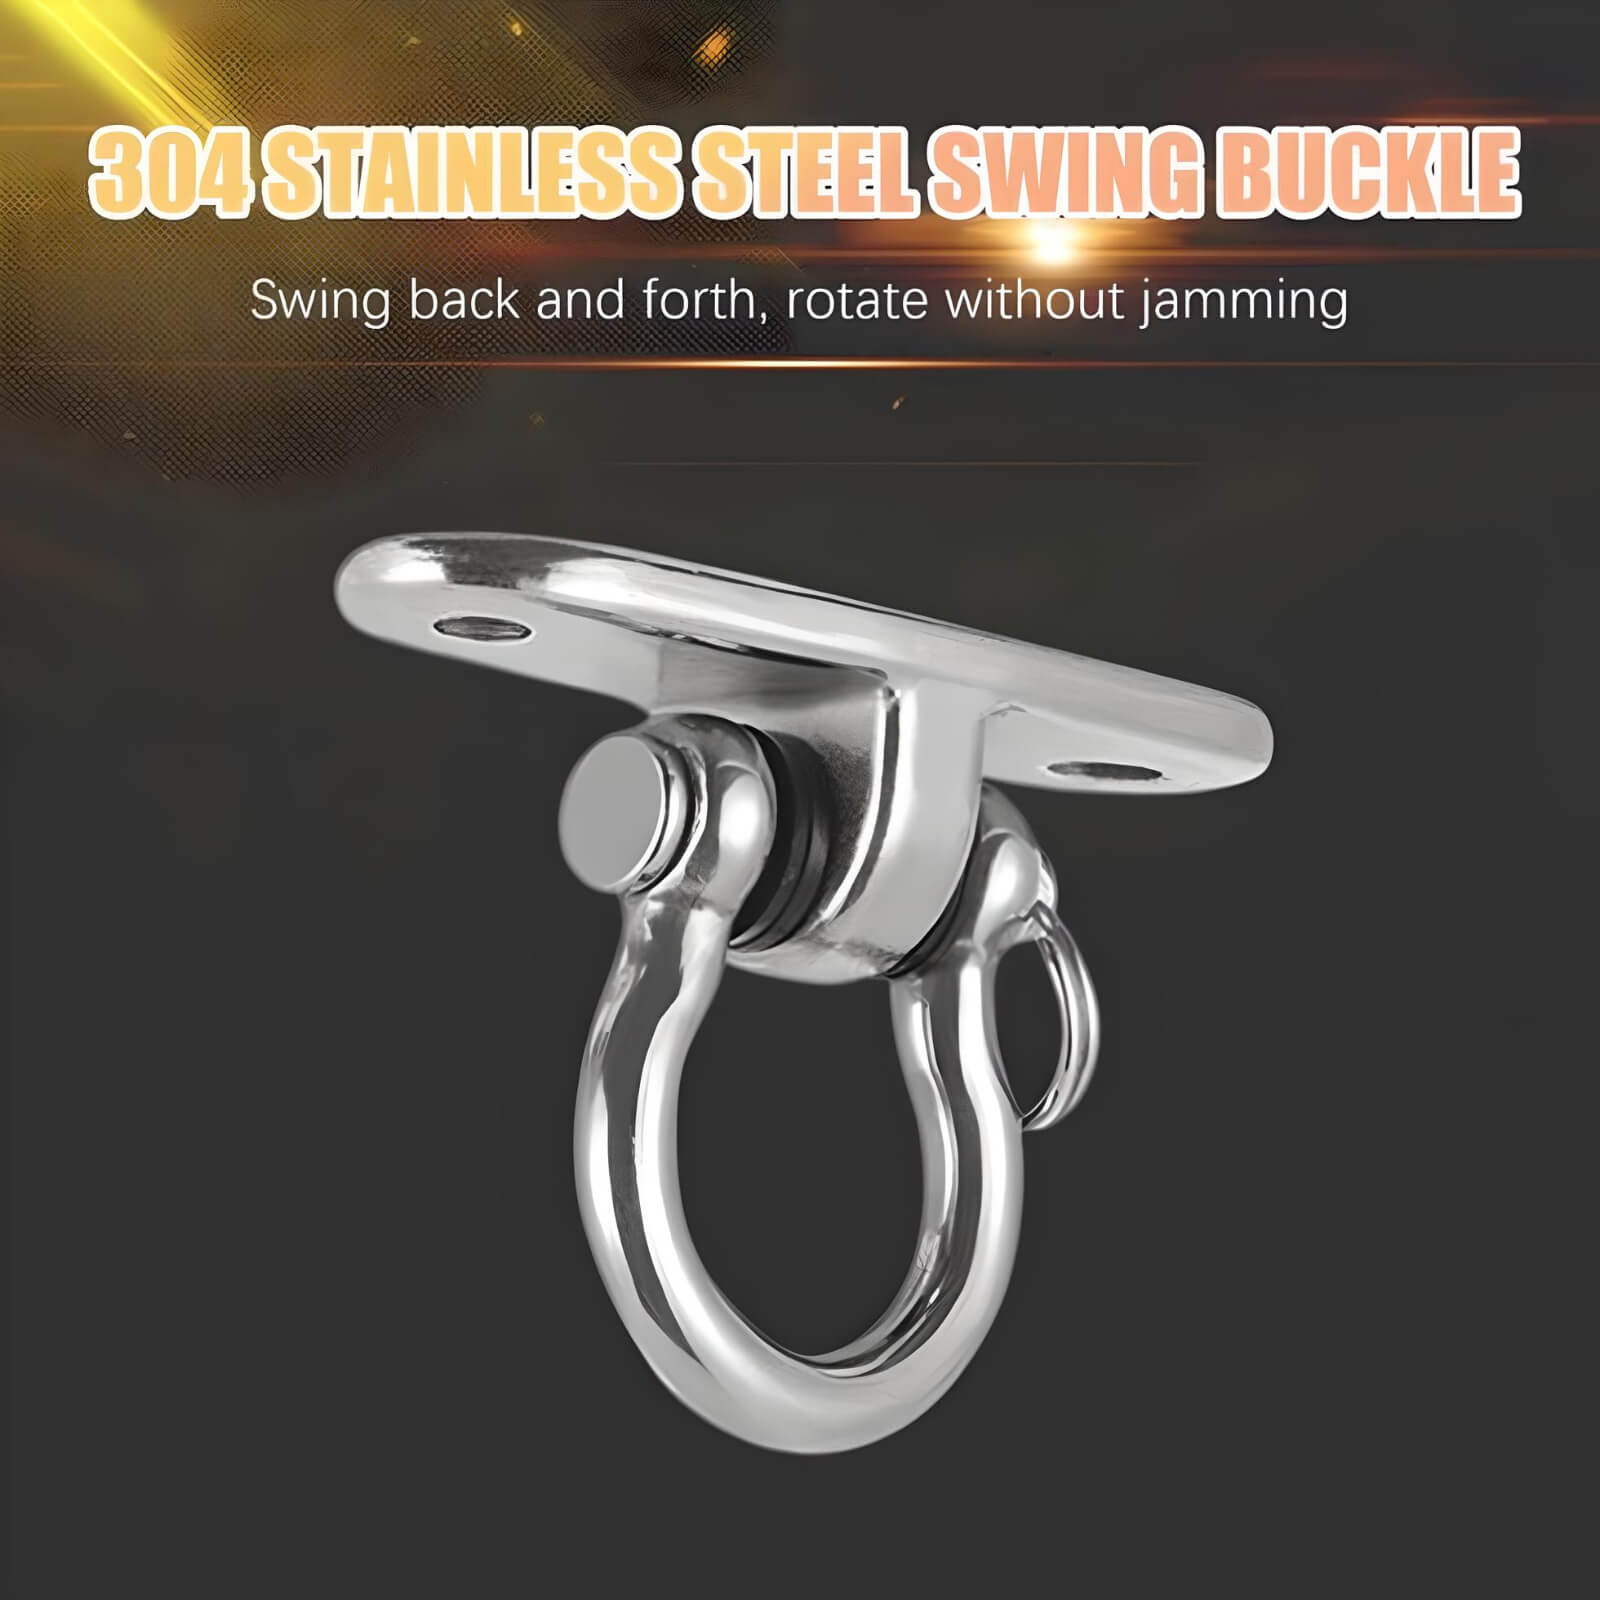 hammock-suspension-kit-304-stain-less-steel-swing-buckle